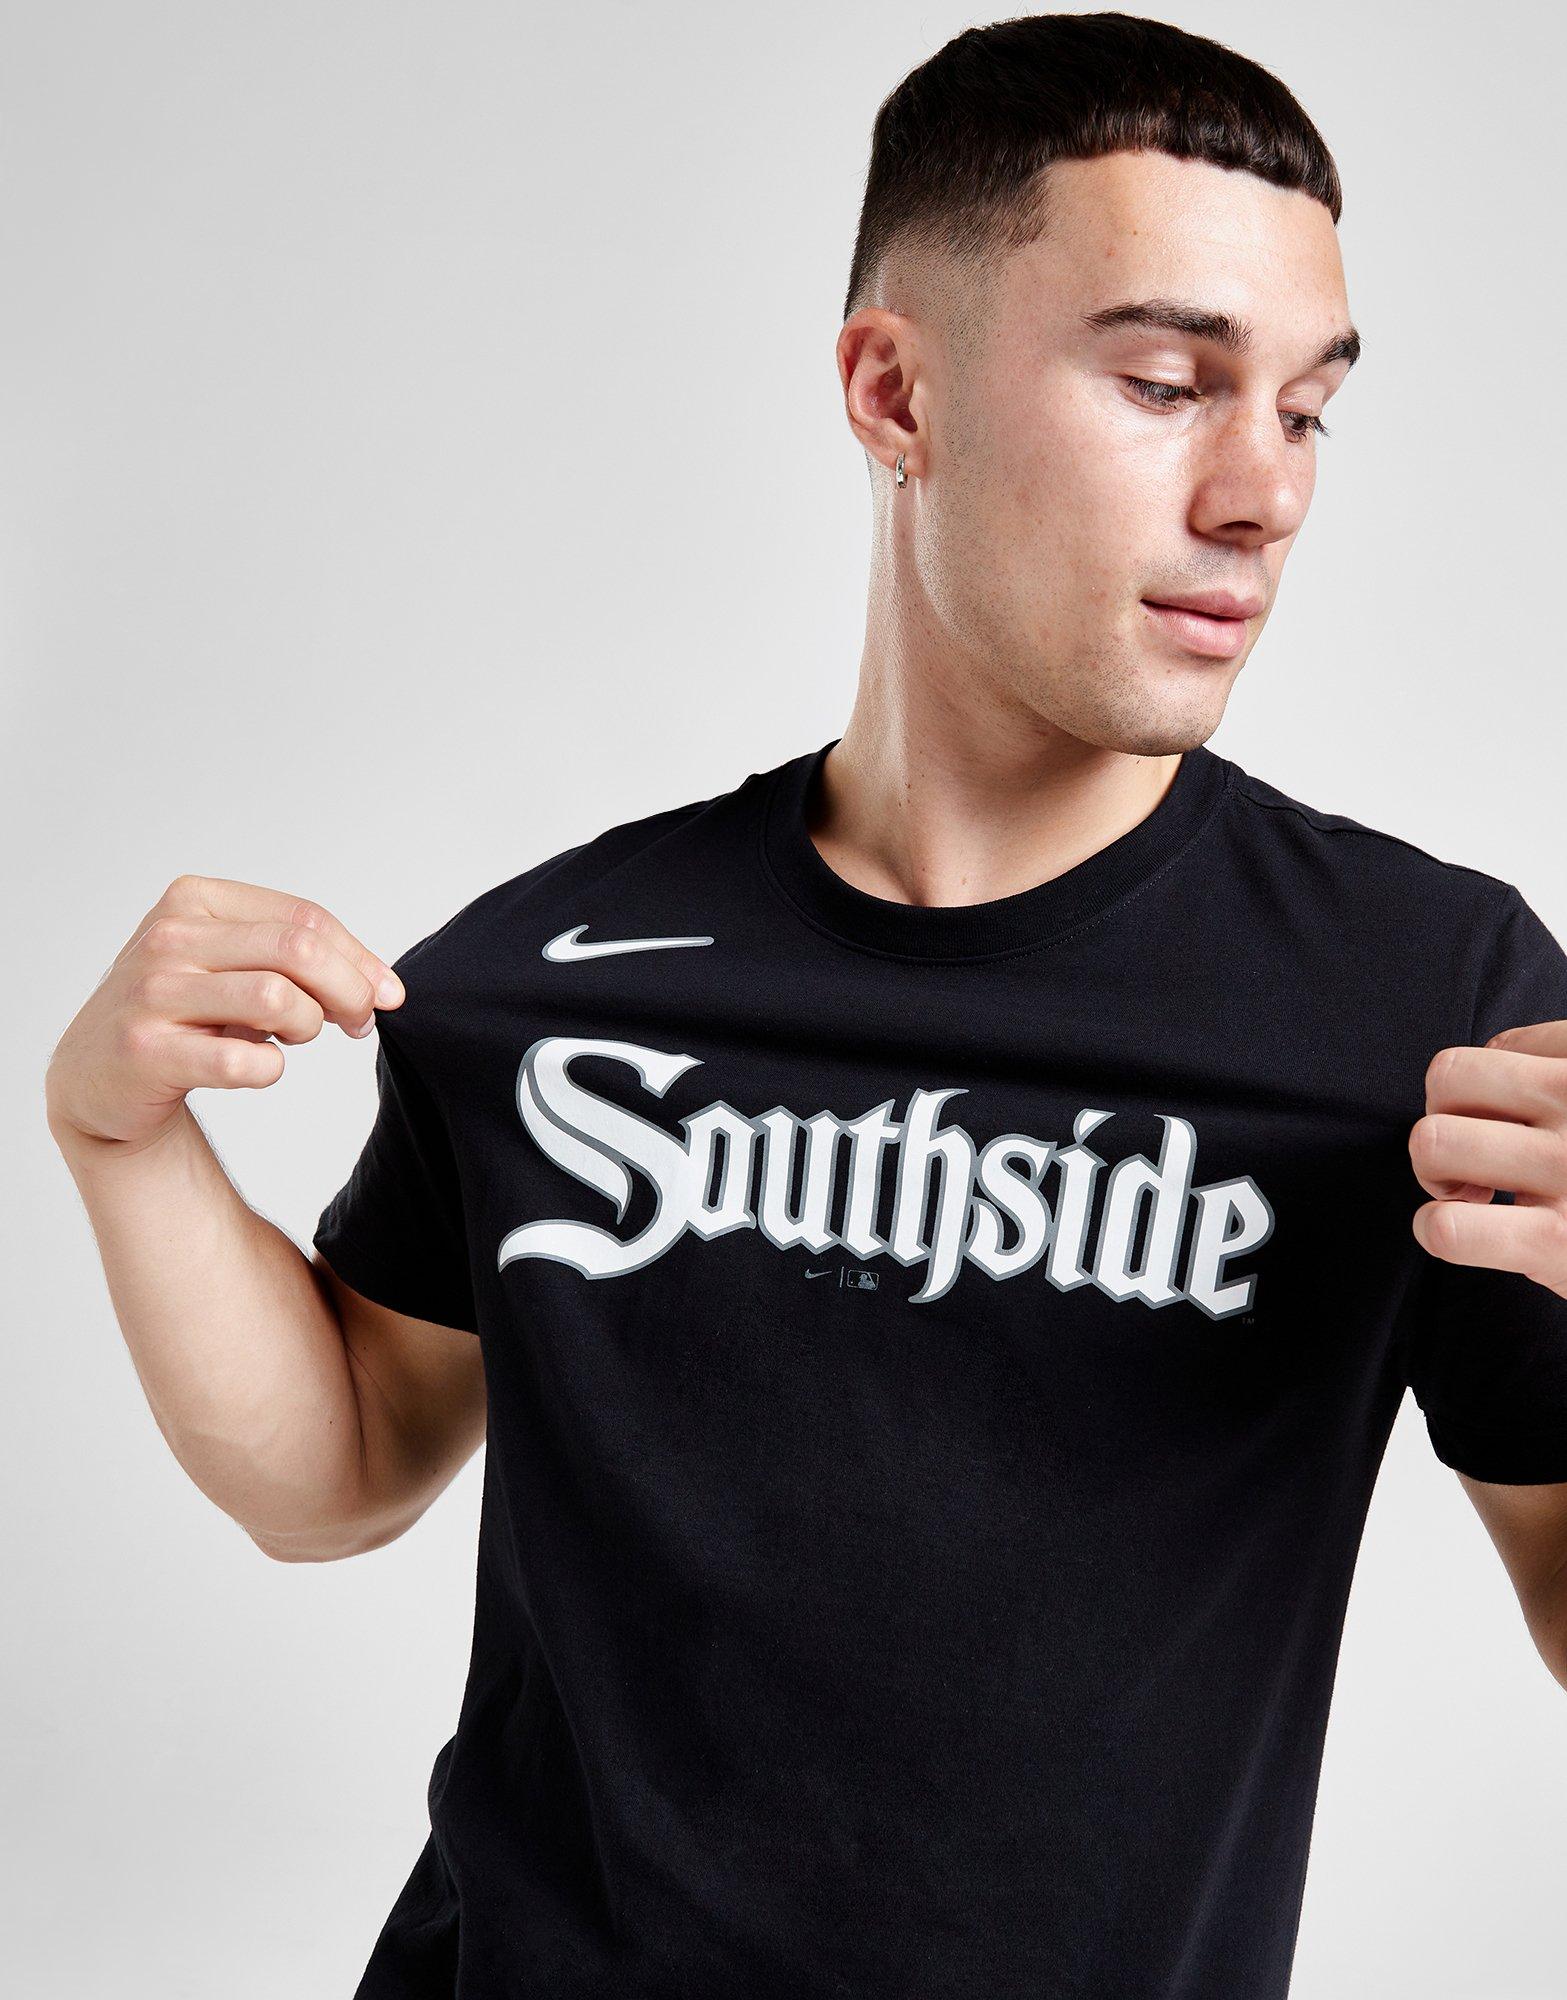 southside nike shirt